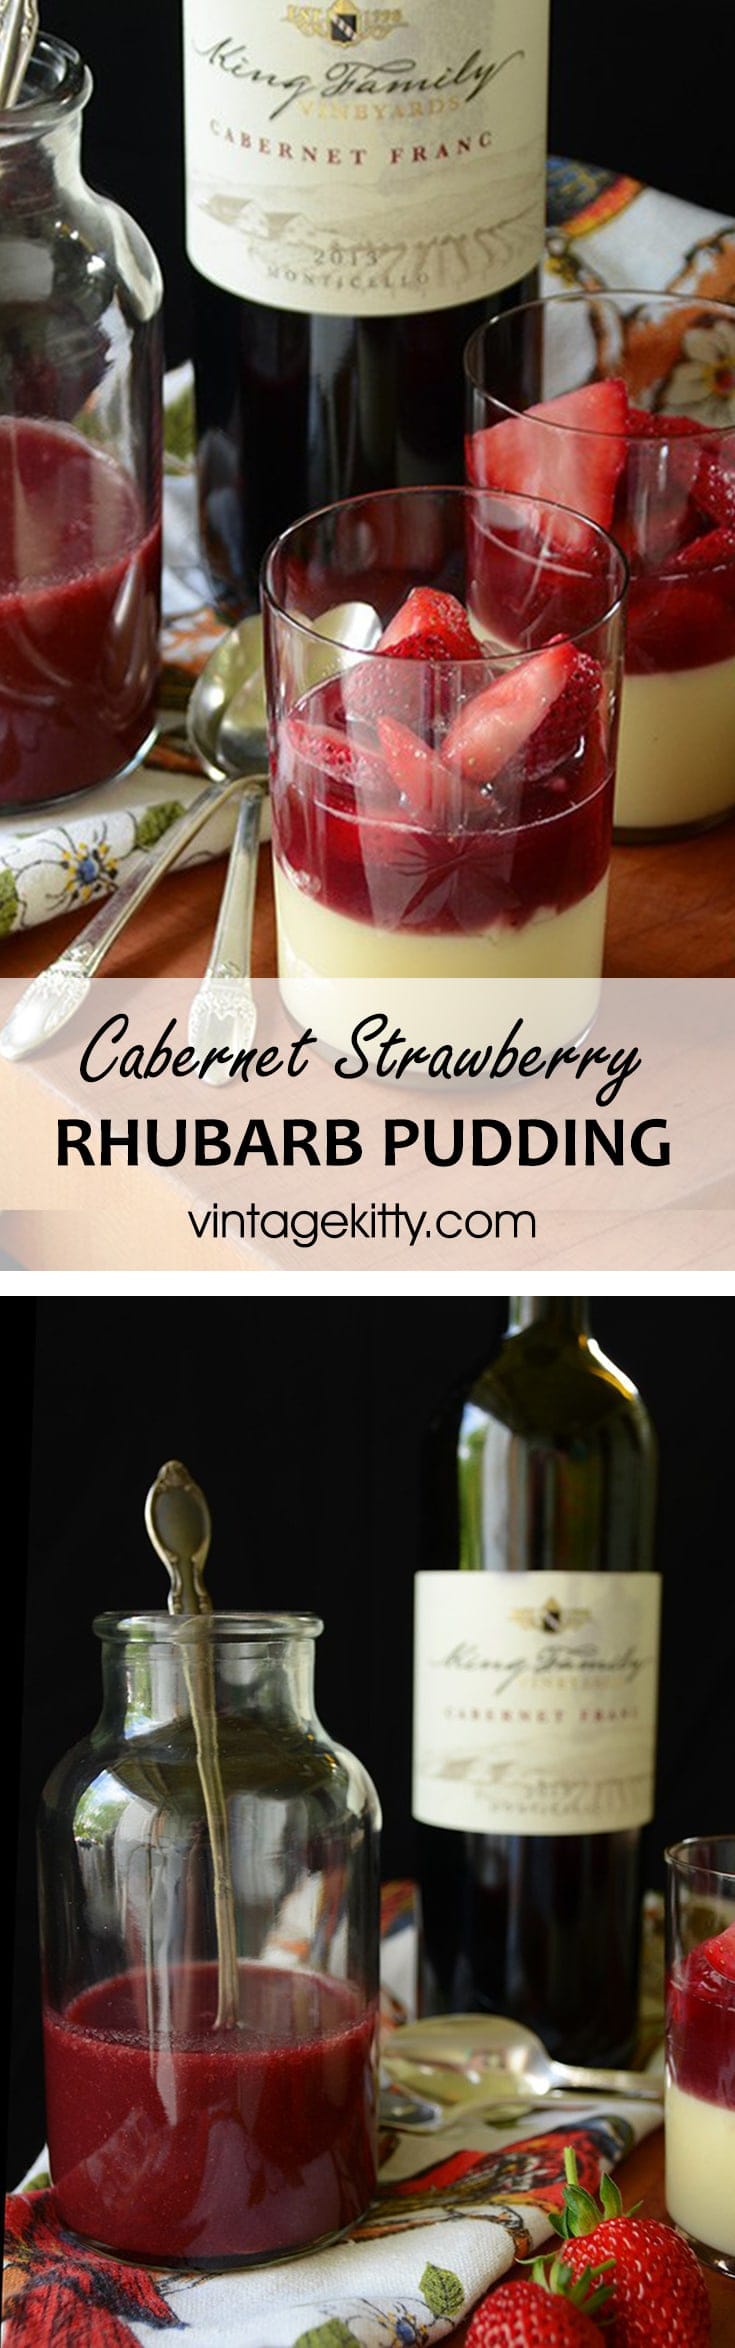 Cabernet Strawberry Rhubarb Pudding - Elegant Cabernet Strawberry Rhubarb Pudding